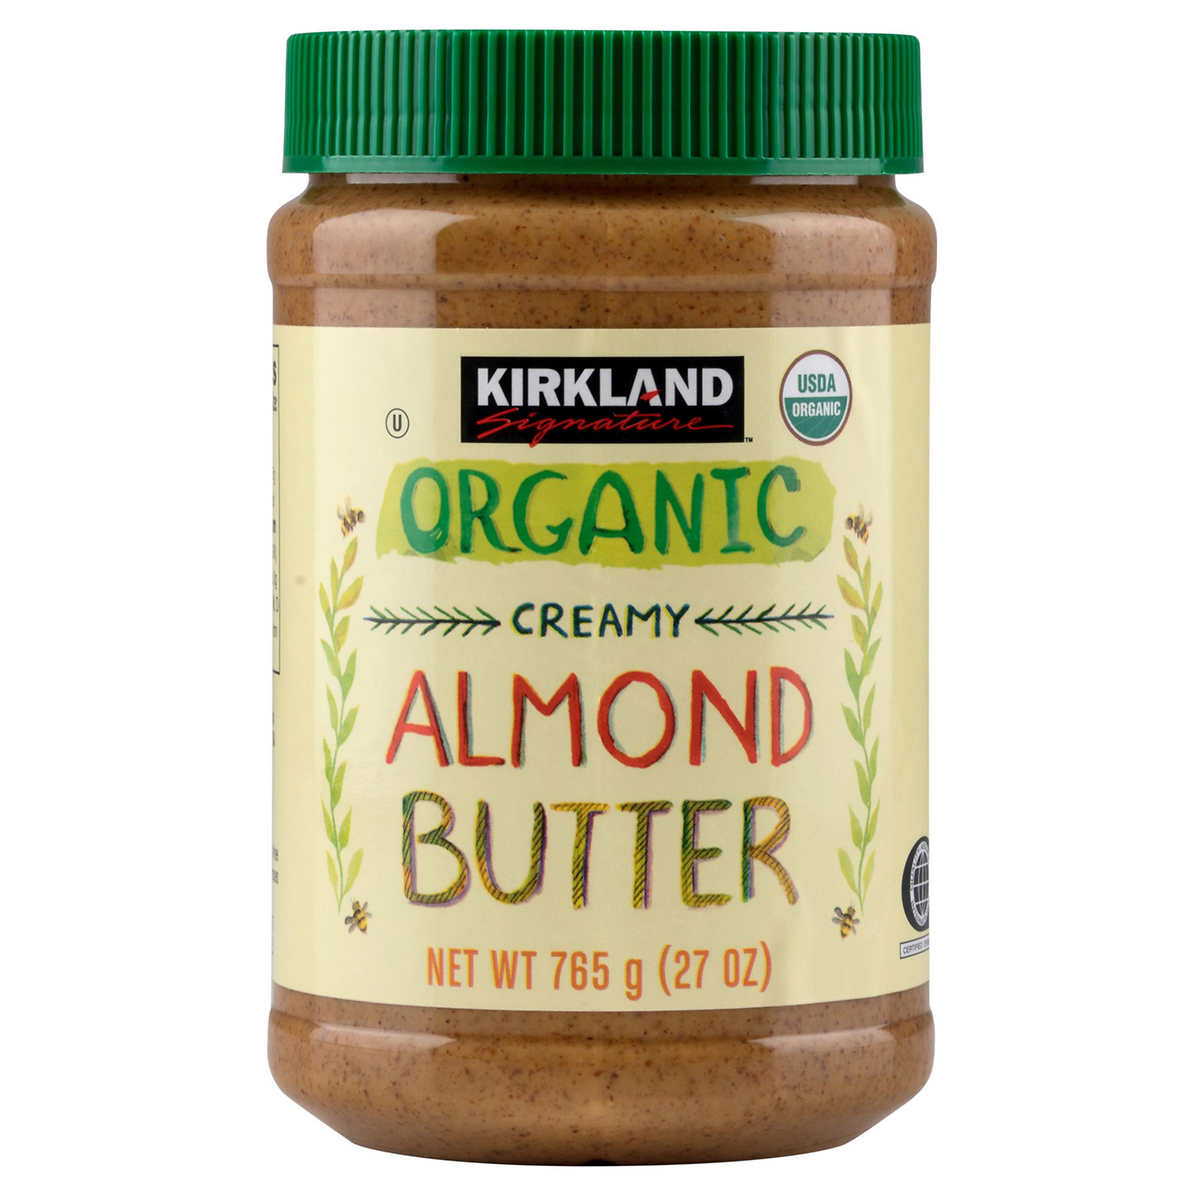 Costco offers organic almond butter.